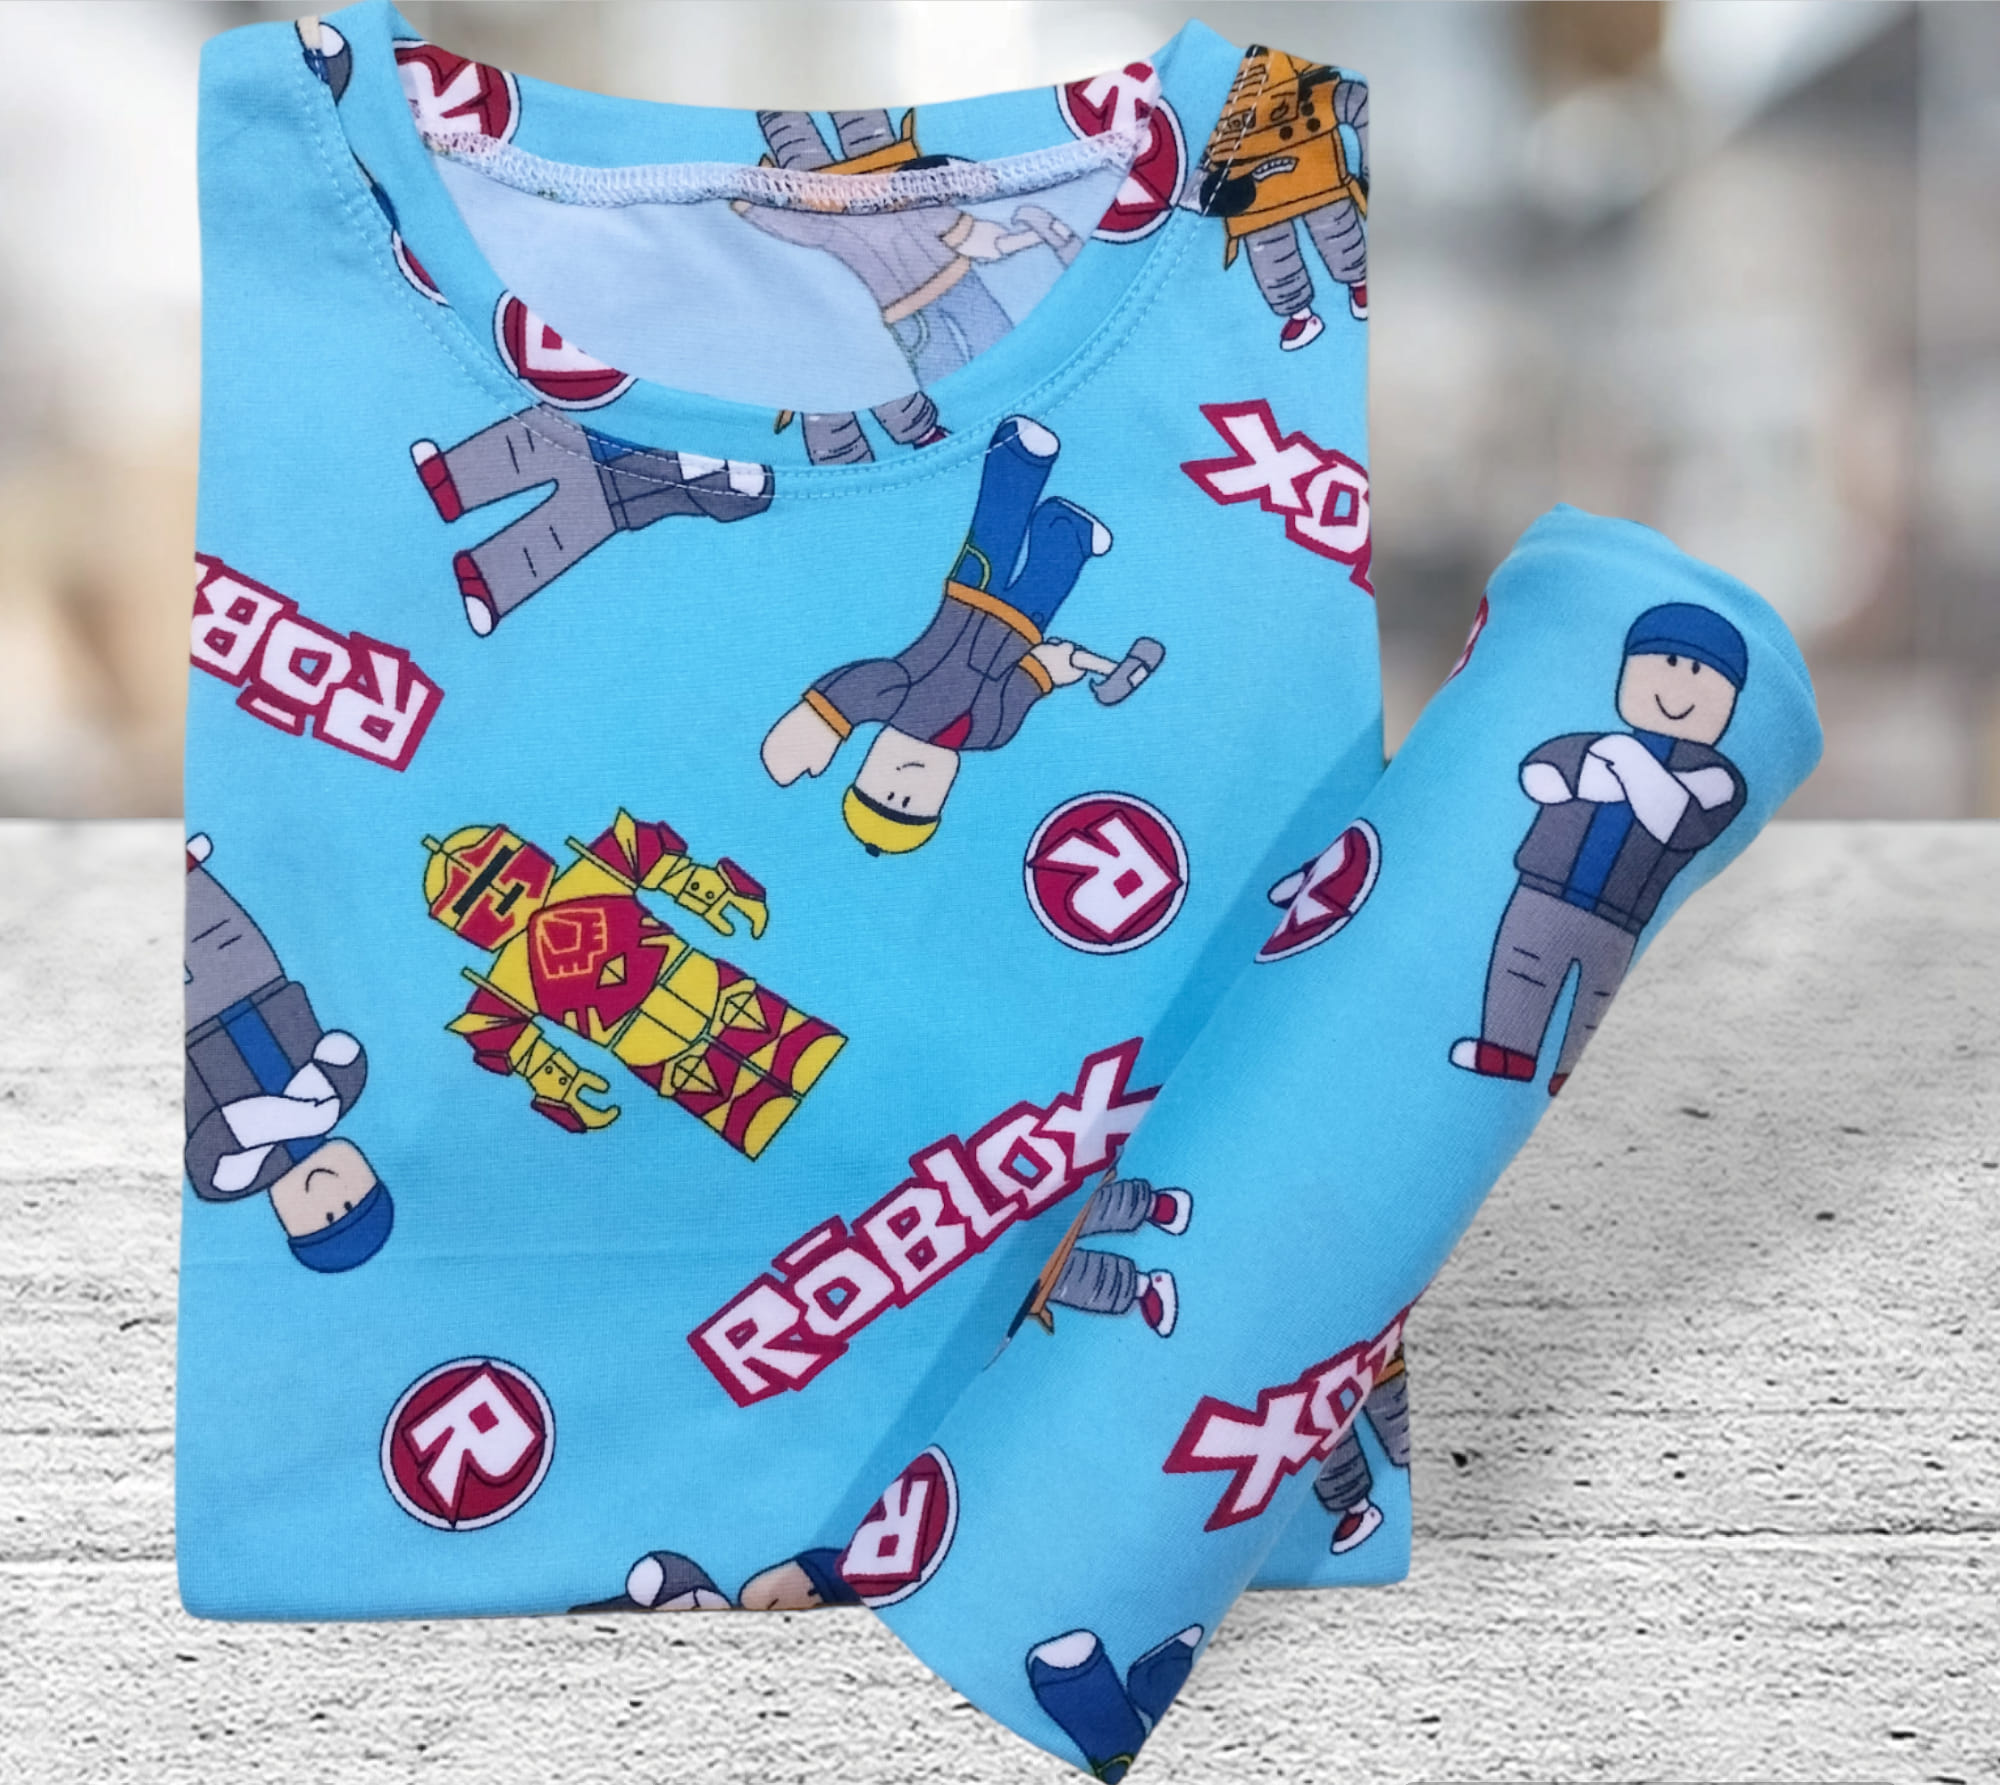 New Roblox - Terno T-shirt and Pajamas Only ₱109.00! #kids terno